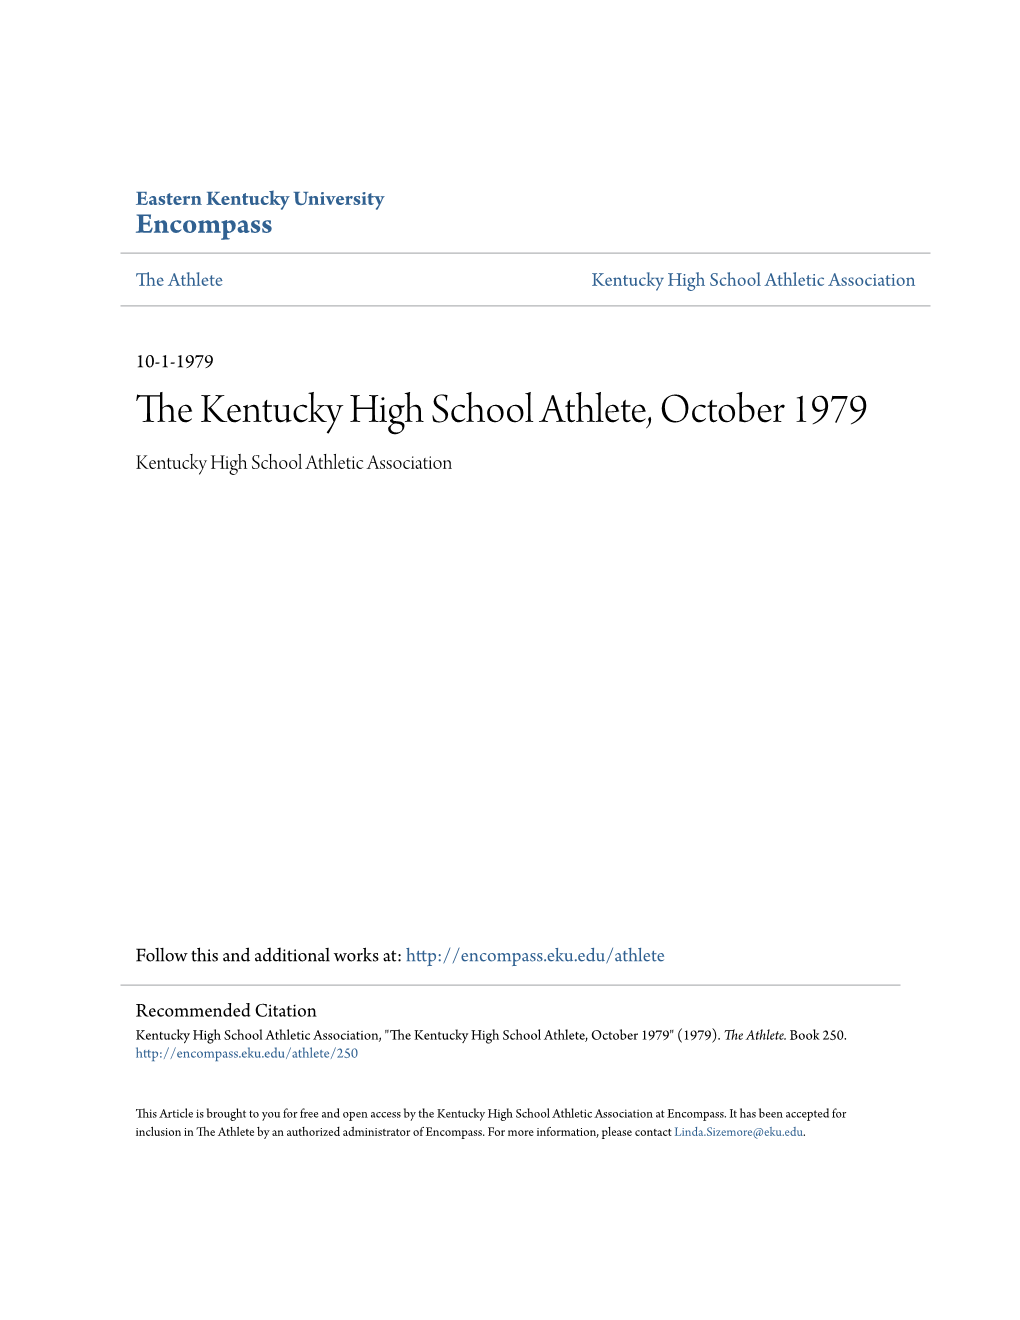 The Kentucky High School Athlete, October 1979 Kentucky High School Athletic Association